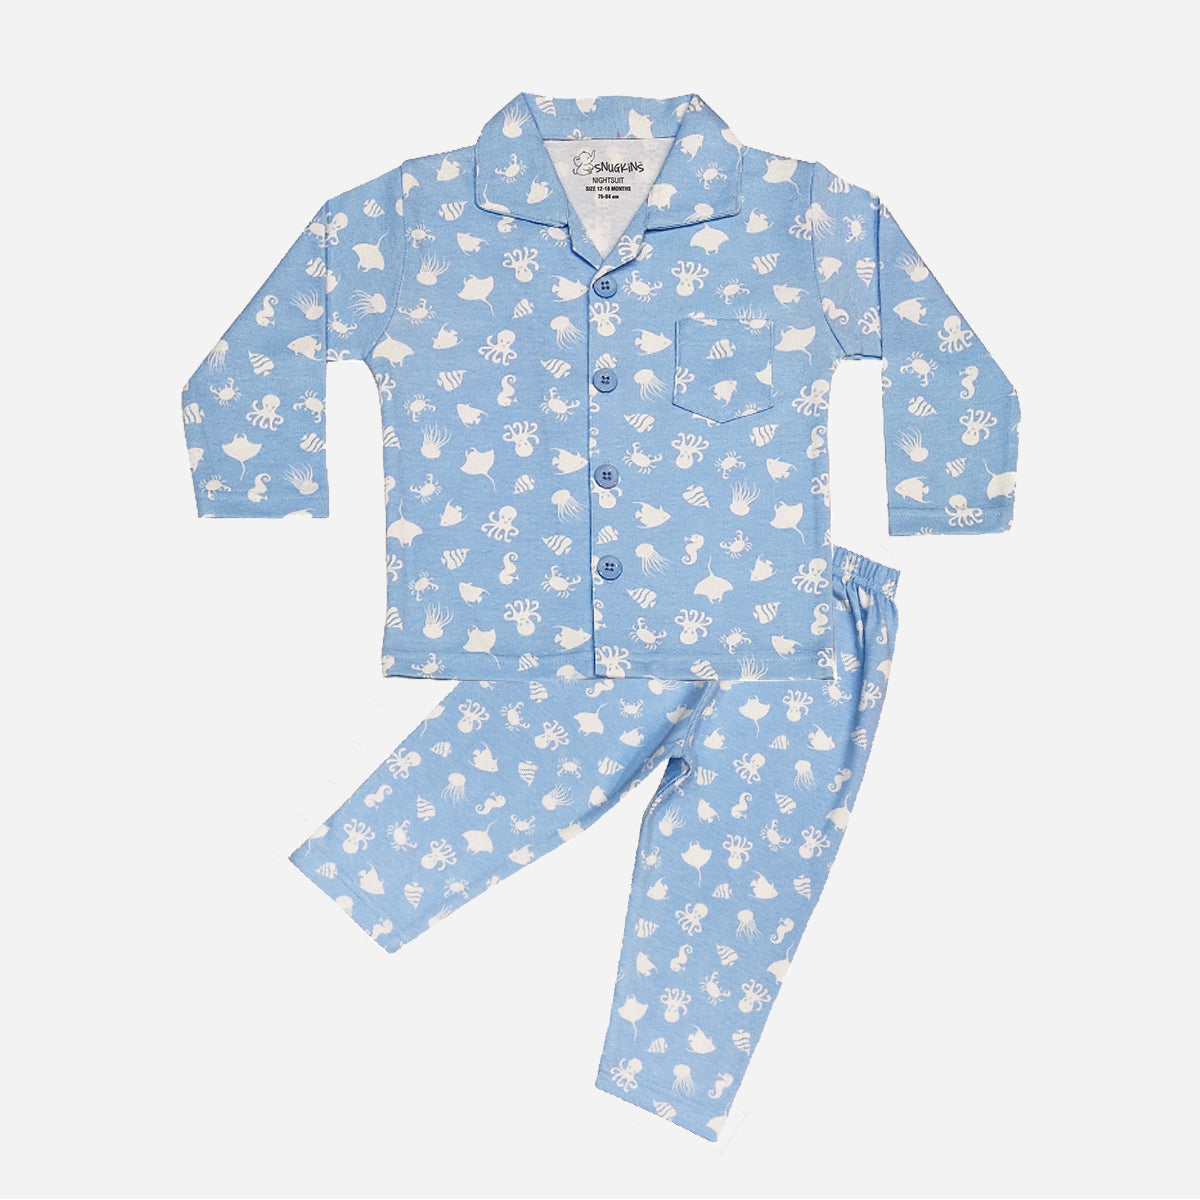 Full Sleeves Baby Octopus Printed Pajamas / Night Suit  for Baby/Kids - Sky Blue